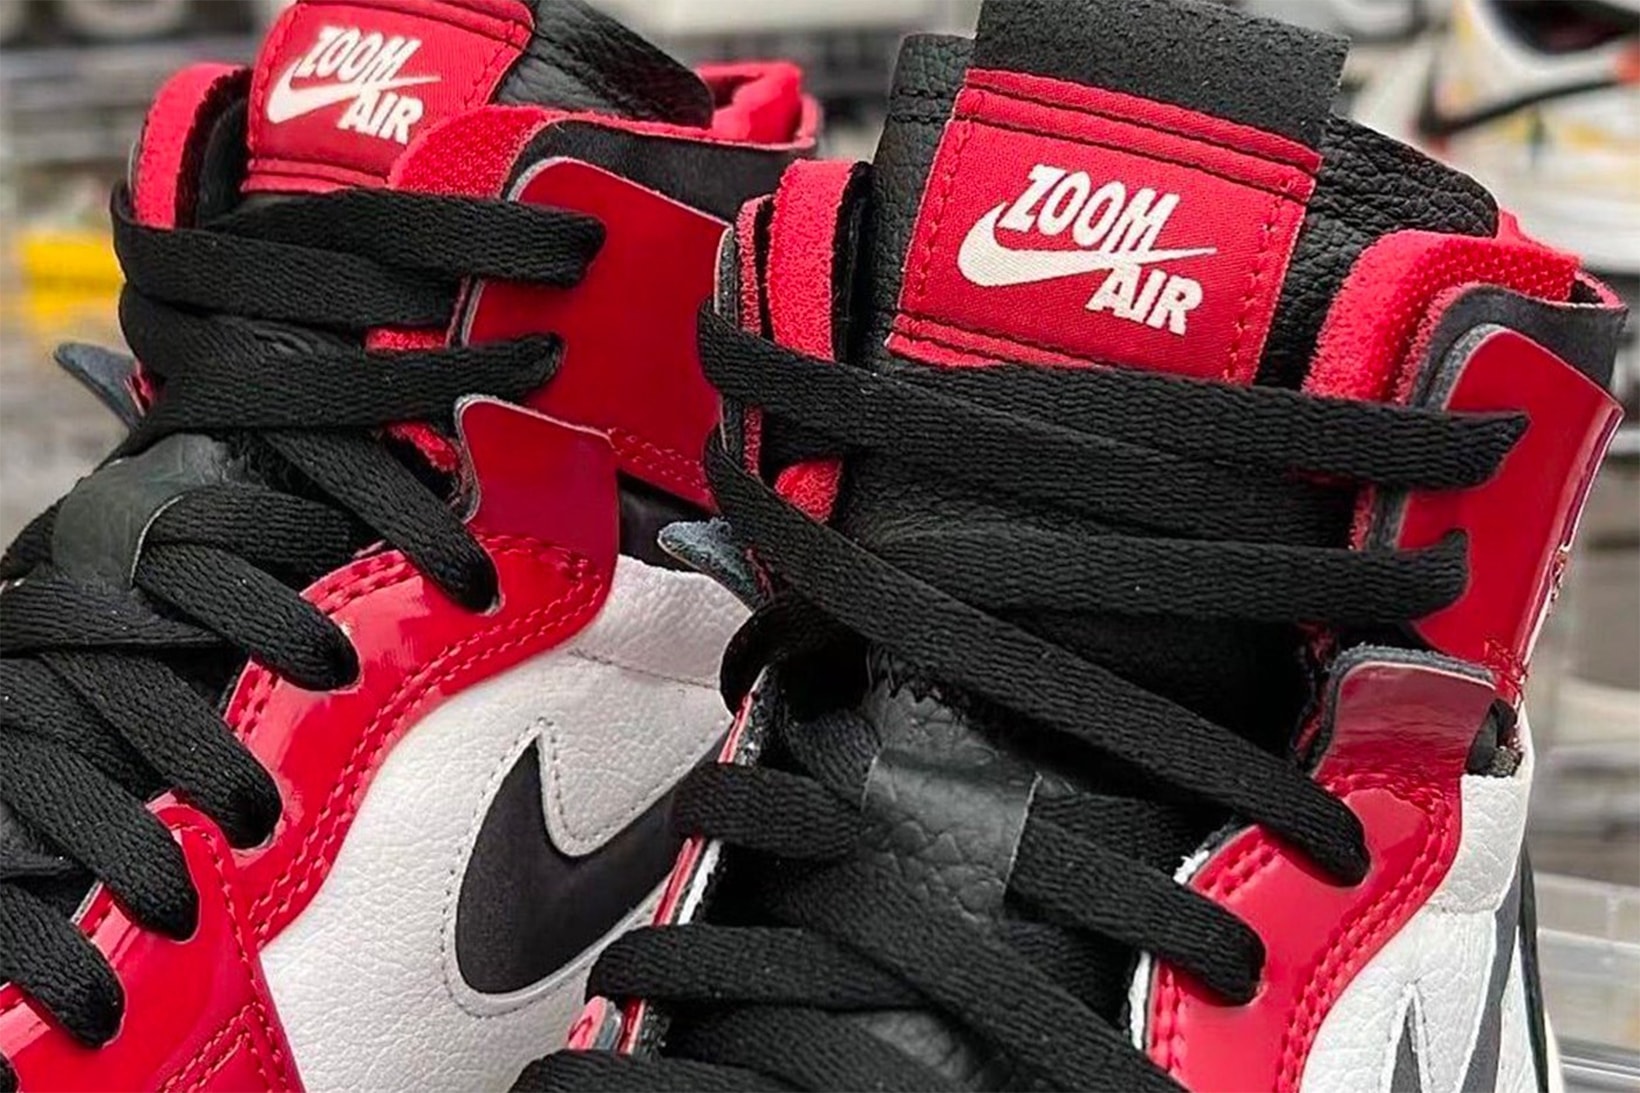 Nike Air Jordan 1 Zoom CMFT Chicago Black Toe Patent Leather Tongue Tag Details